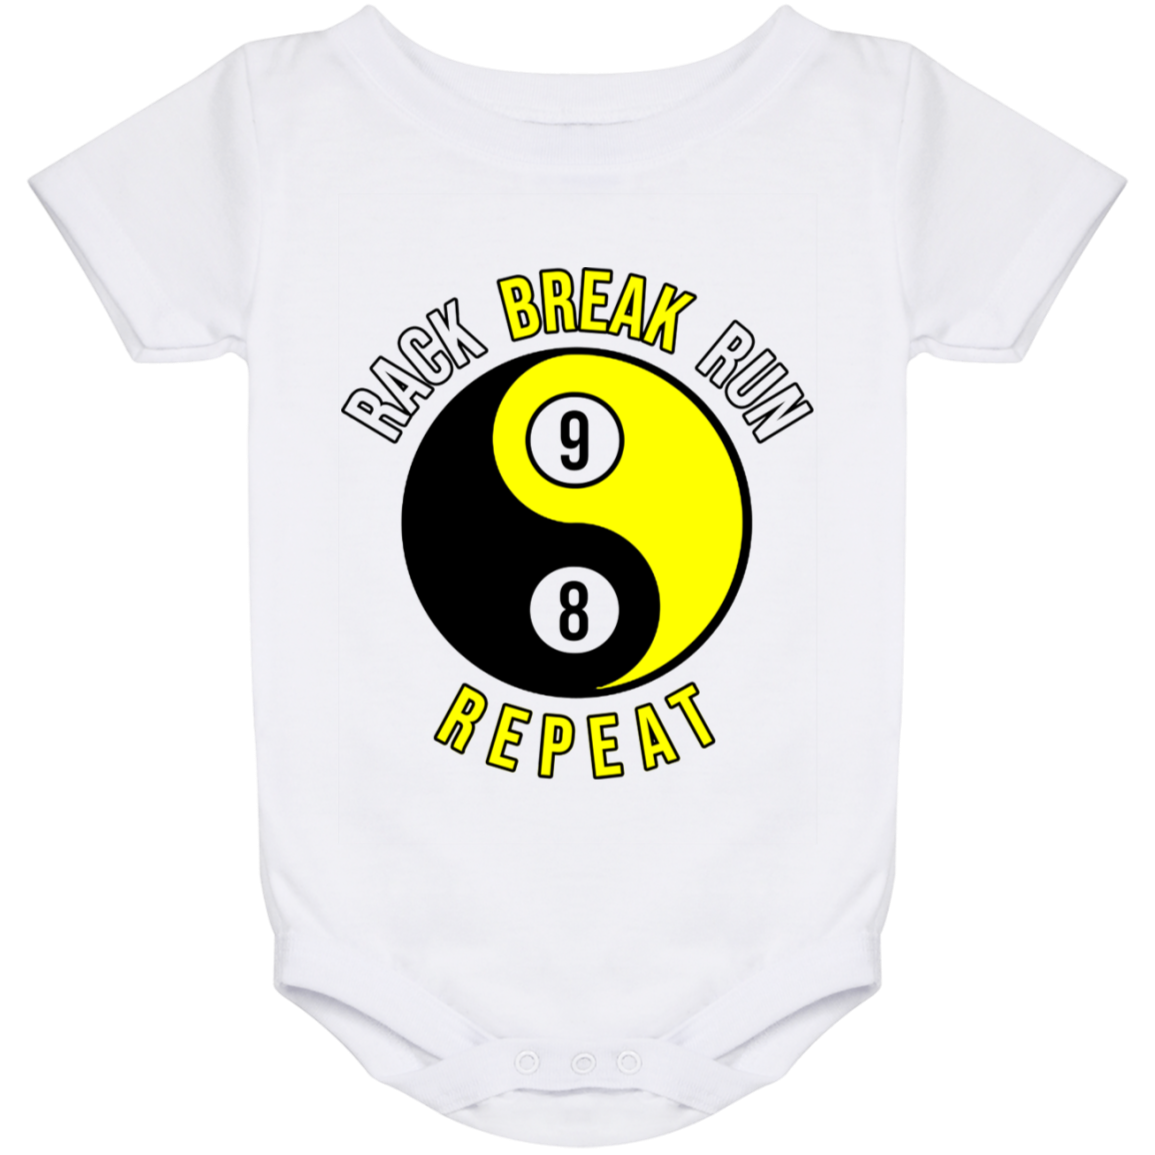 The GHOATS Custom Design #7. Rack Break Run Repeat. Ying Yang. Baby Onesie 24 Month